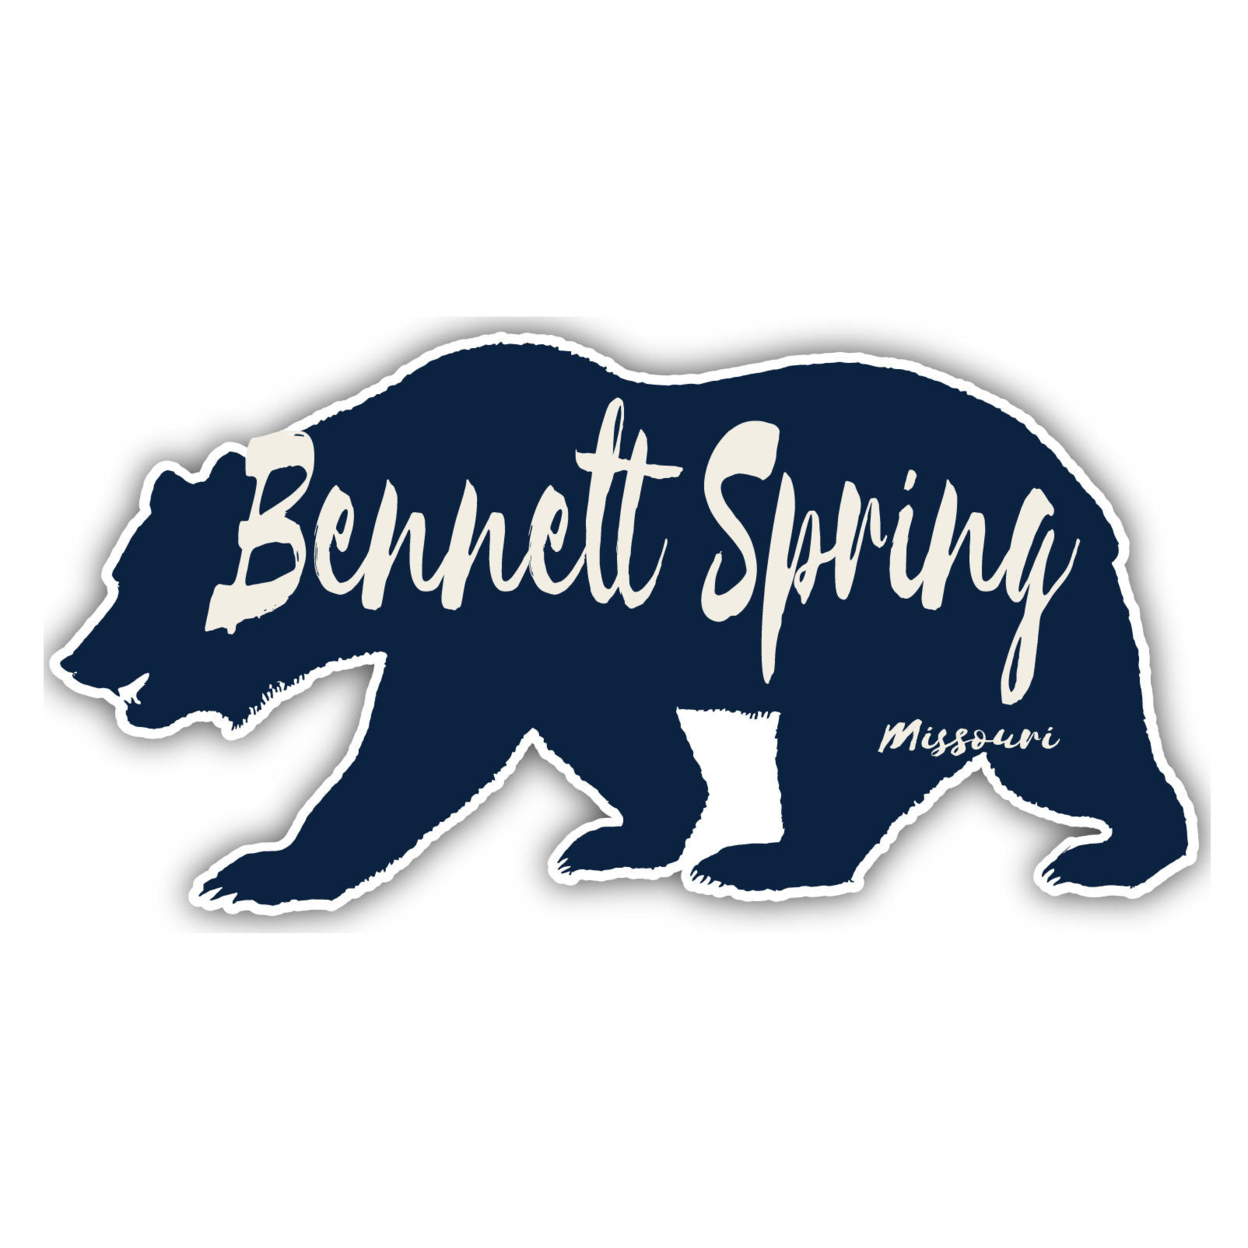 Bennett Spring Missouri Souvenir Decorative Stickers (Choose Theme And Size) - Single Unit, 8-Inch, Bear